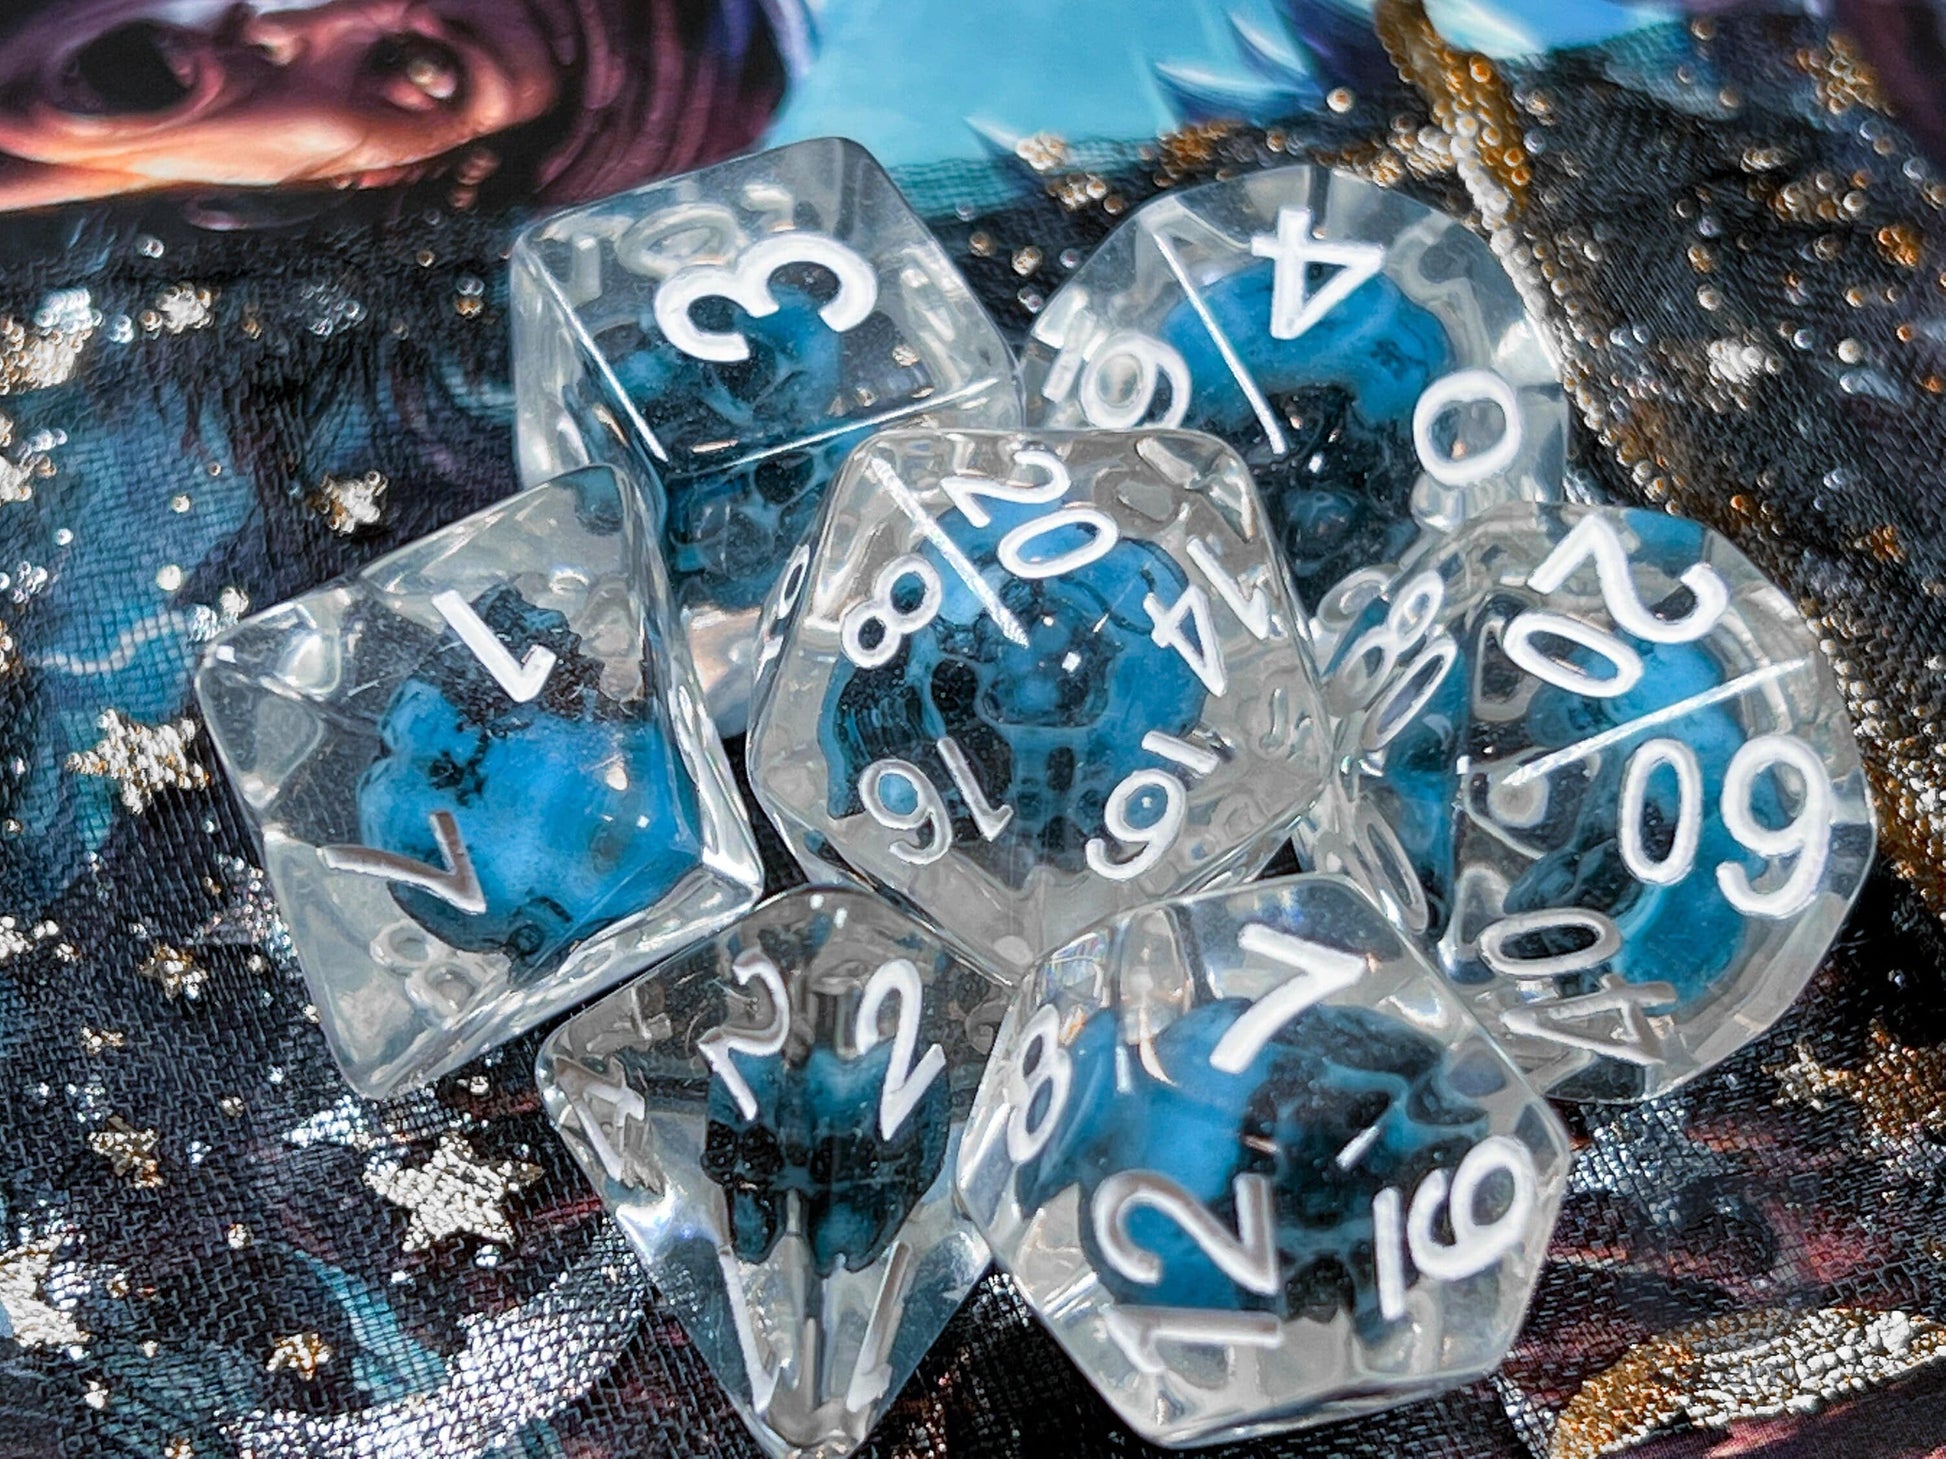 The Crooked Tavern Frozen Skull RPG Dice Set | Blue Skulls inside each die!